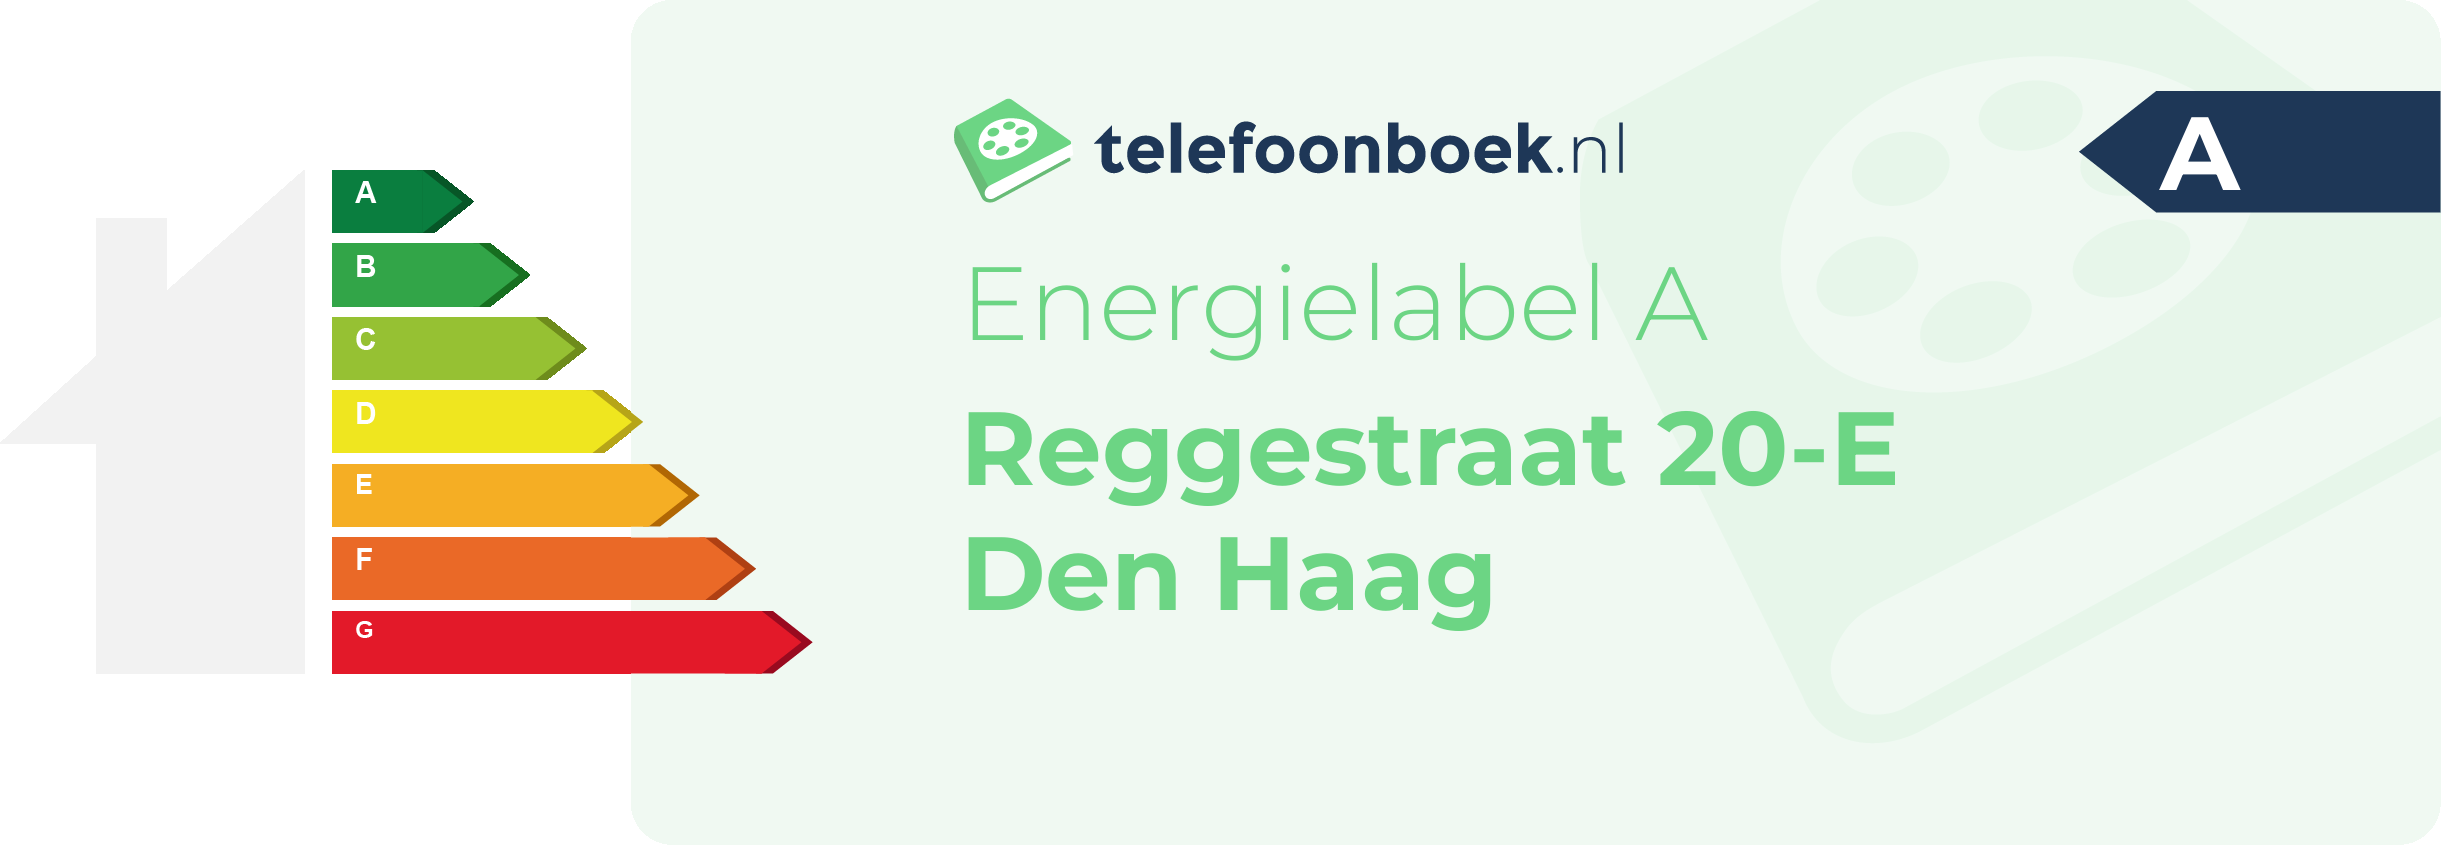 Energielabel Reggestraat 20-E Den Haag